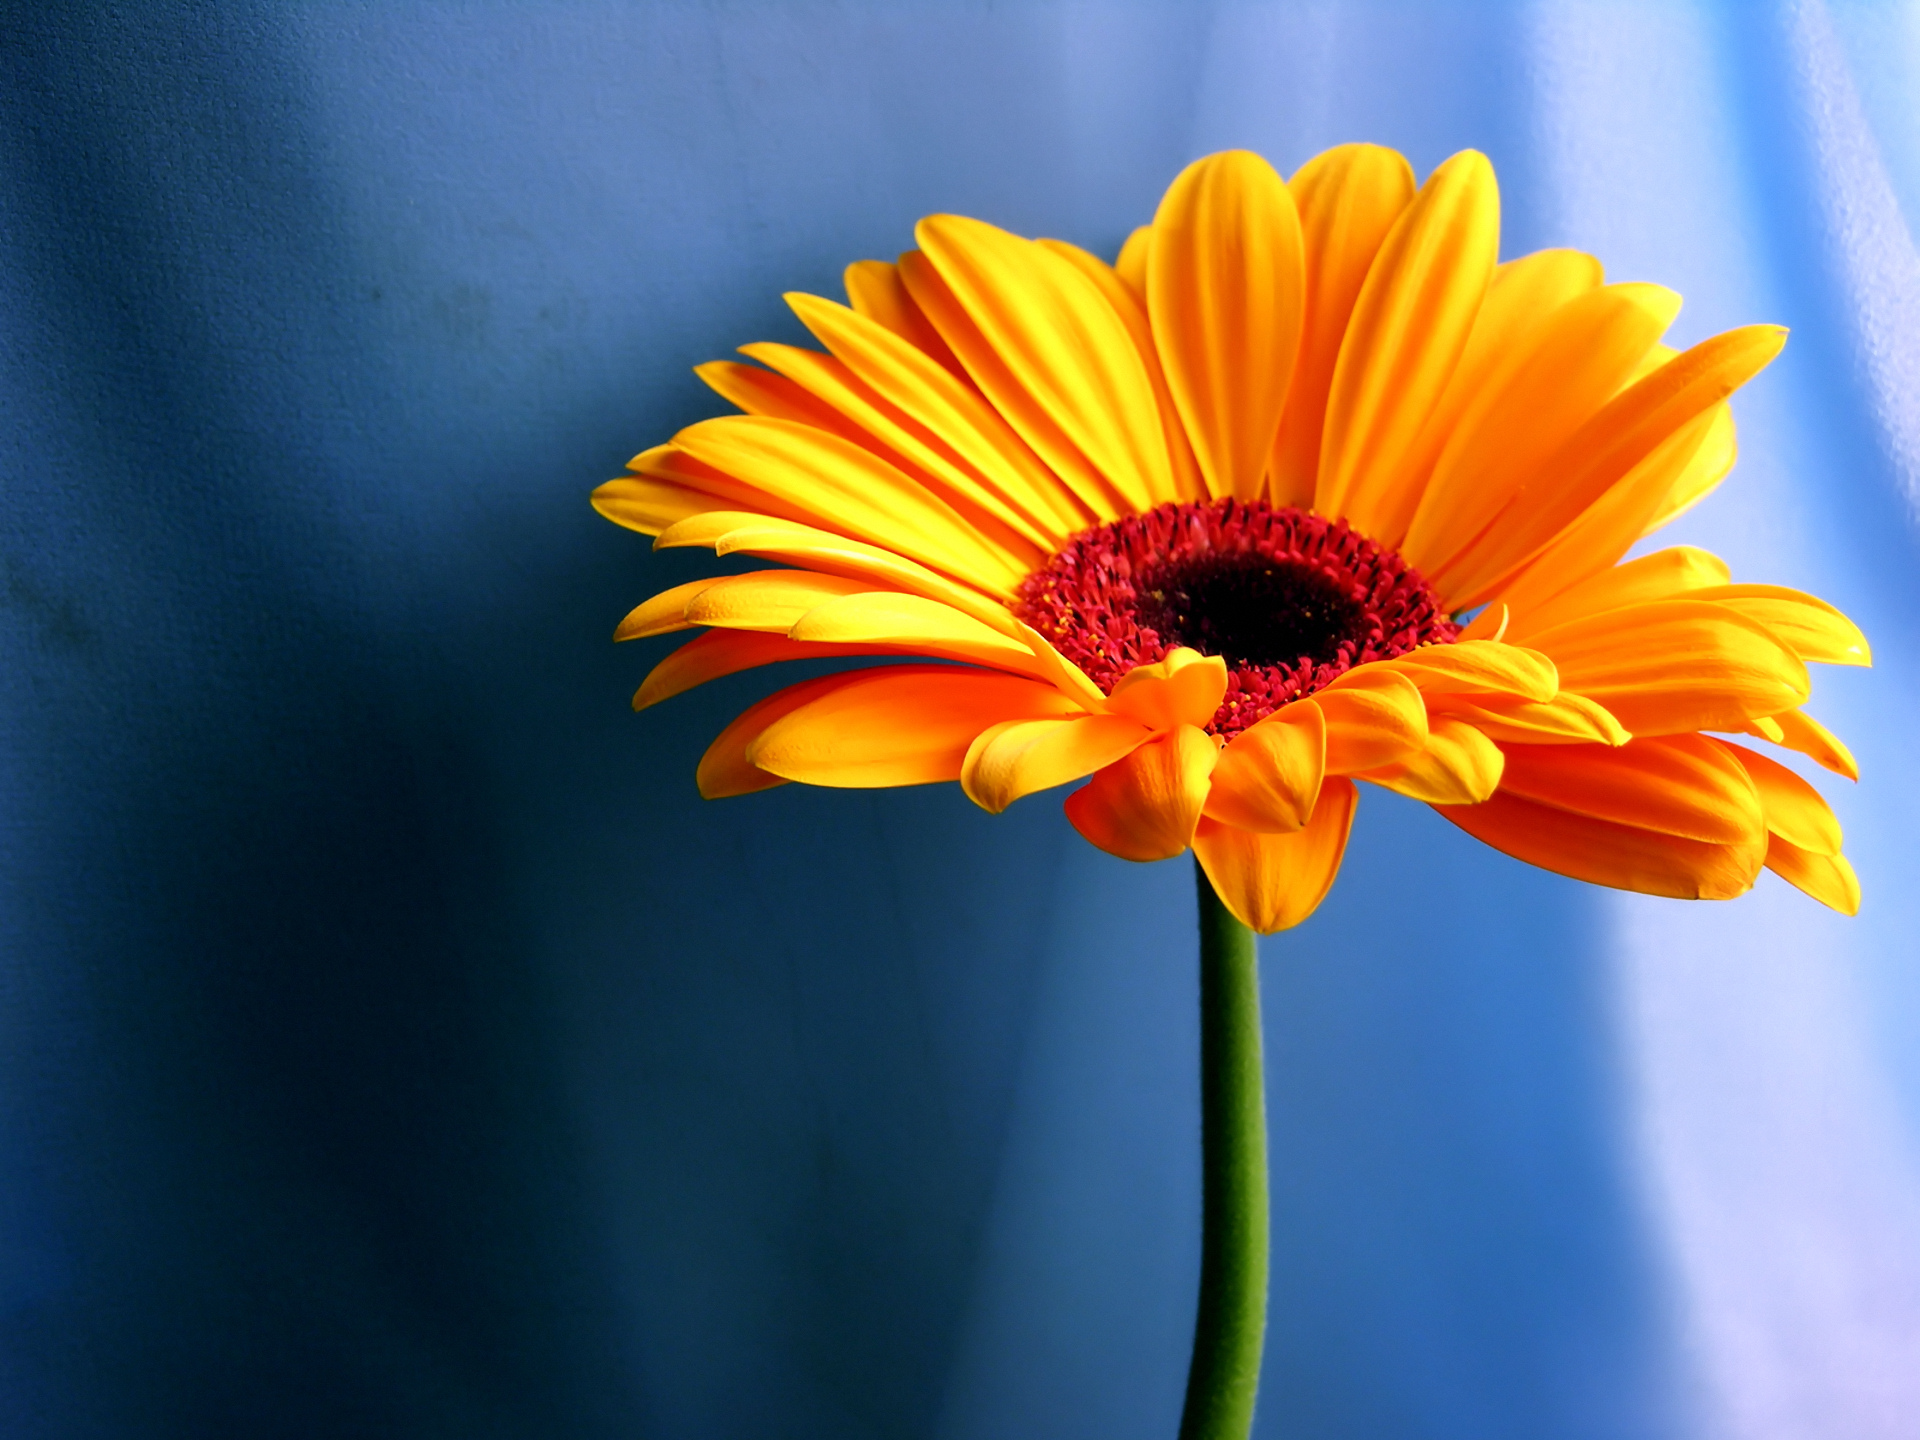 descarga gratuita de fondo de pantalla hd 1080p,flor,planta floreciendo,margarita barberton,pétalo,naranja